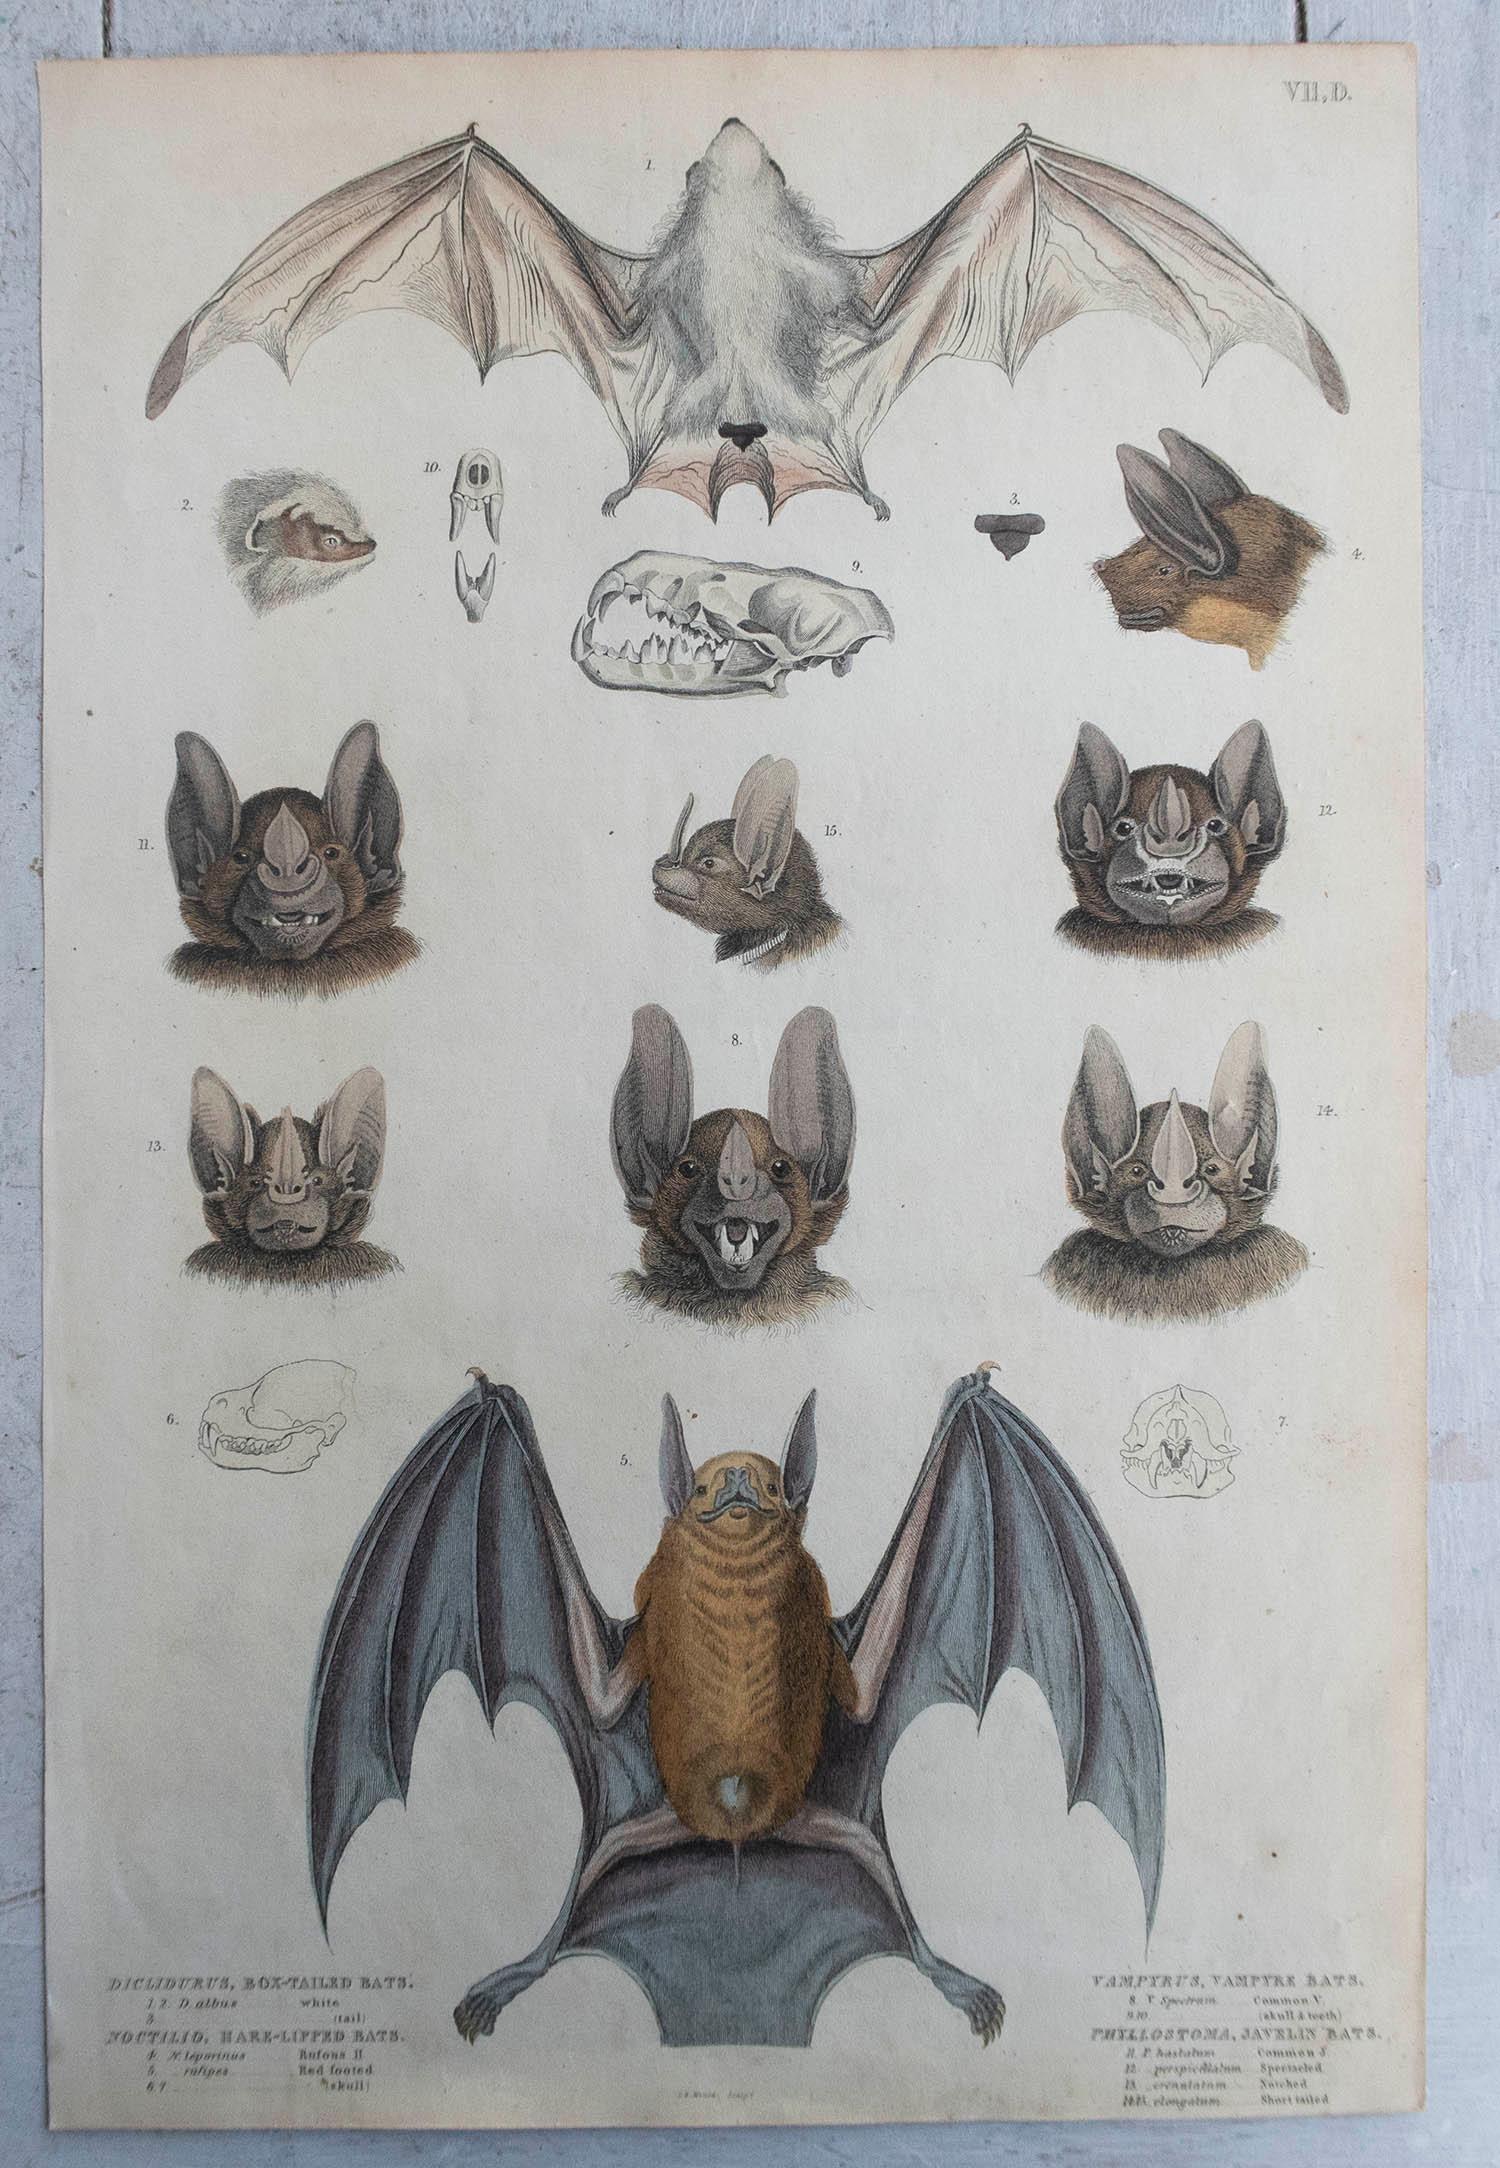 Other Set of 4 Large Original Antique Natural History Prints, Bats, circa 1835